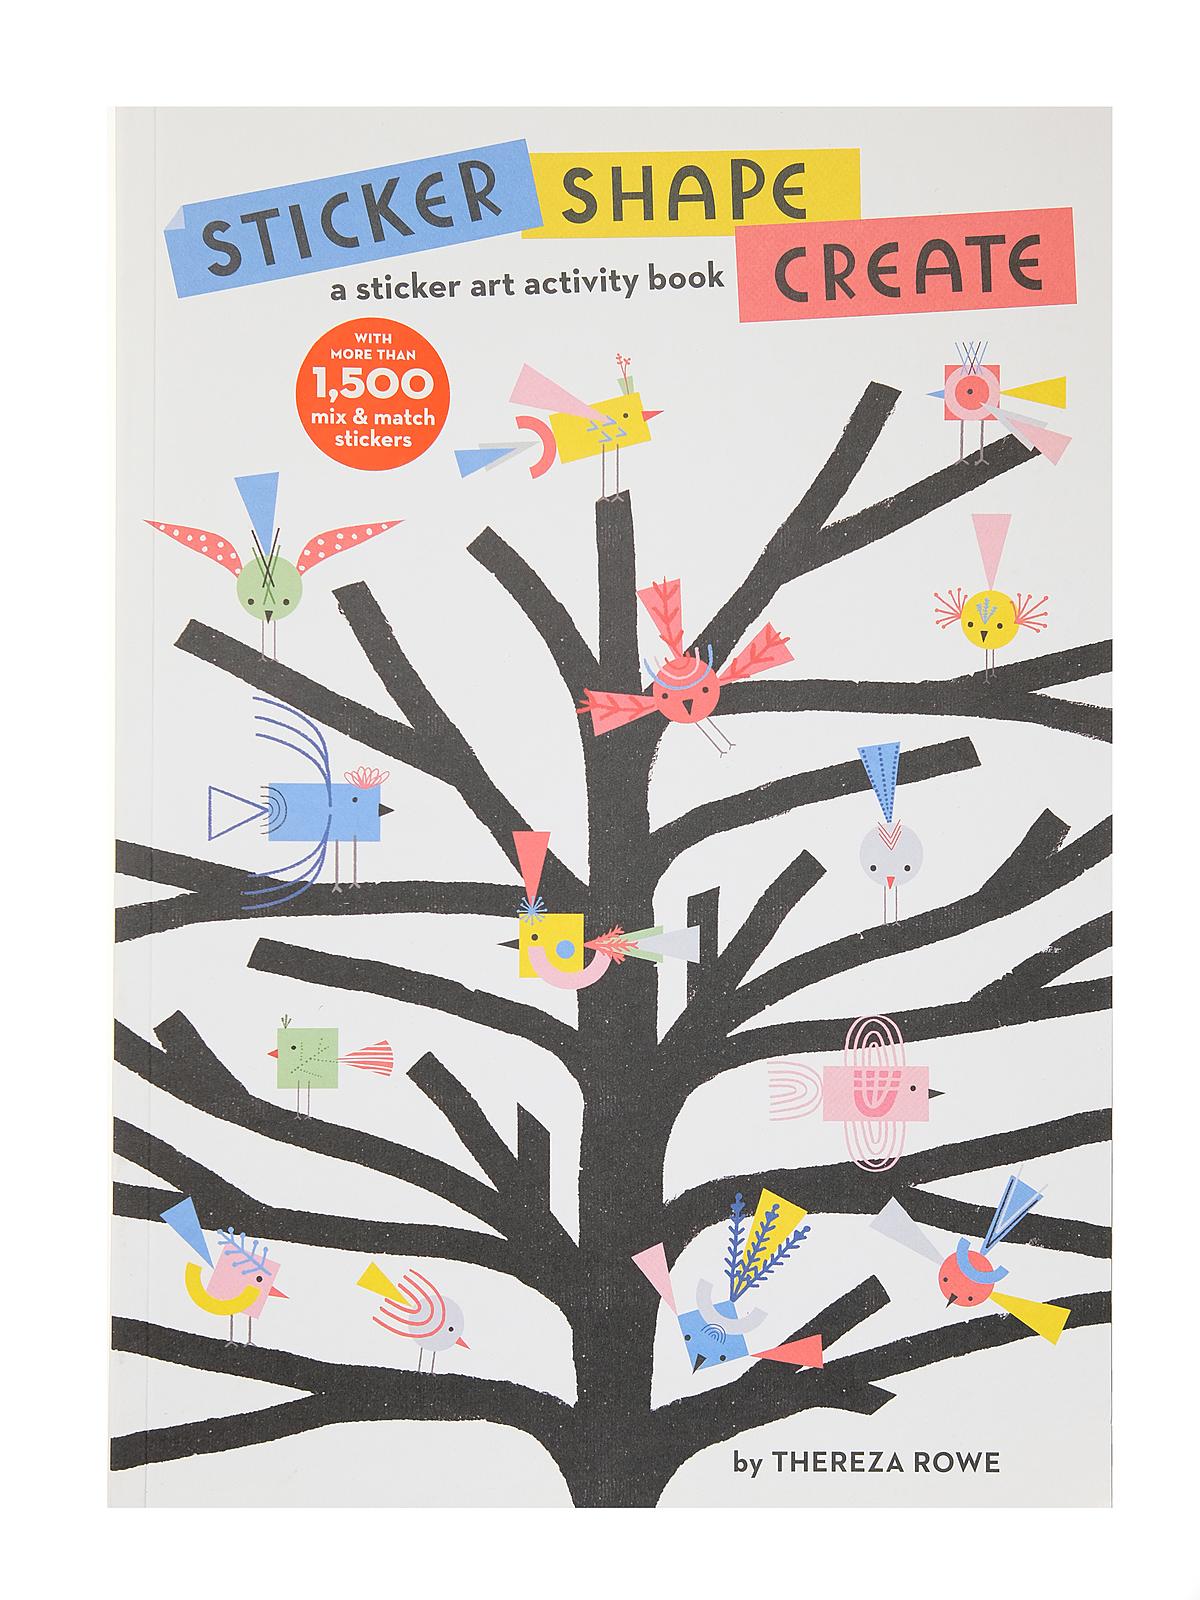 Sticker, Shape, Create Each